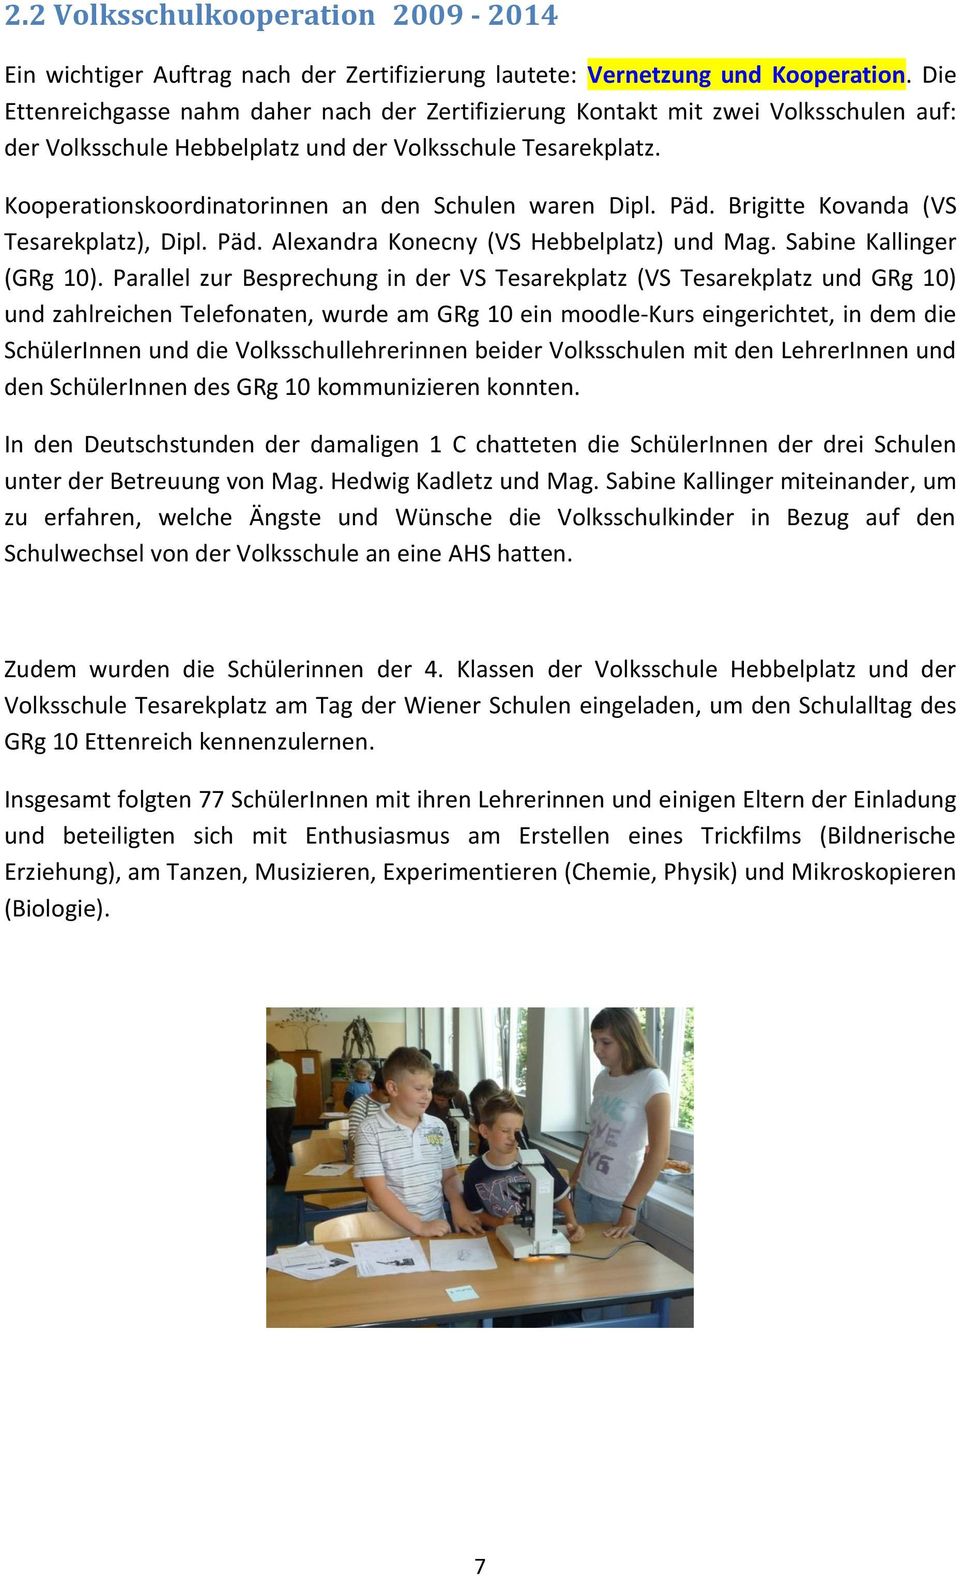 Kooperationskoordinatorinnen an den Schulen waren Dipl. Päd. Brigitte Kovanda (VS Tesarekplatz), Dipl. Päd. Alexandra Konecny (VS Hebbelplatz) und Mag. Sabine Kallinger (GRg 10).